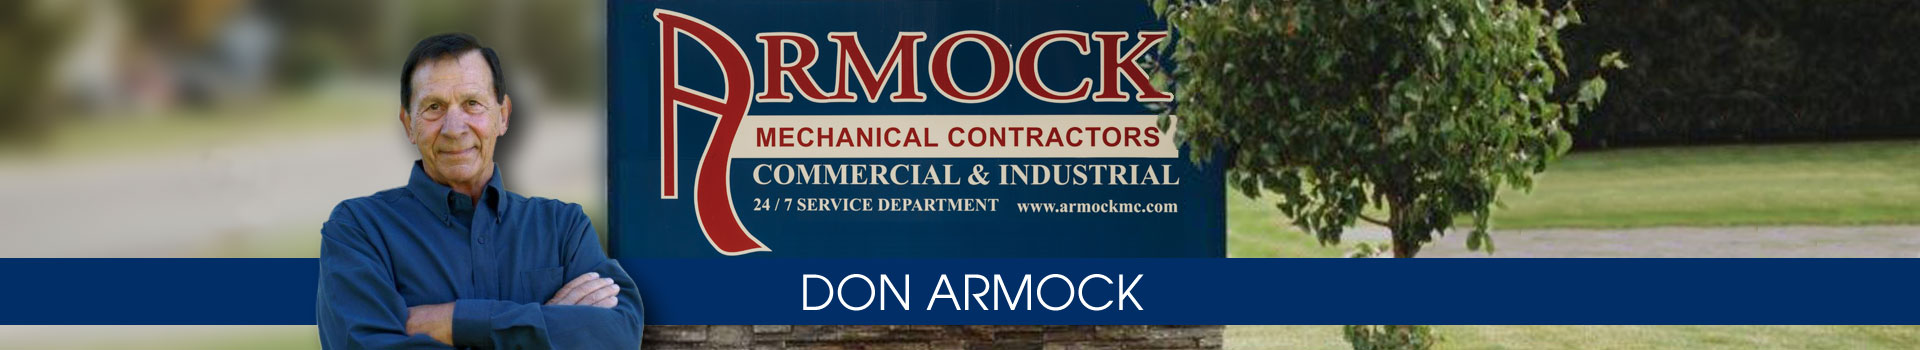 Founder Don Armock photo w/ bldg sign